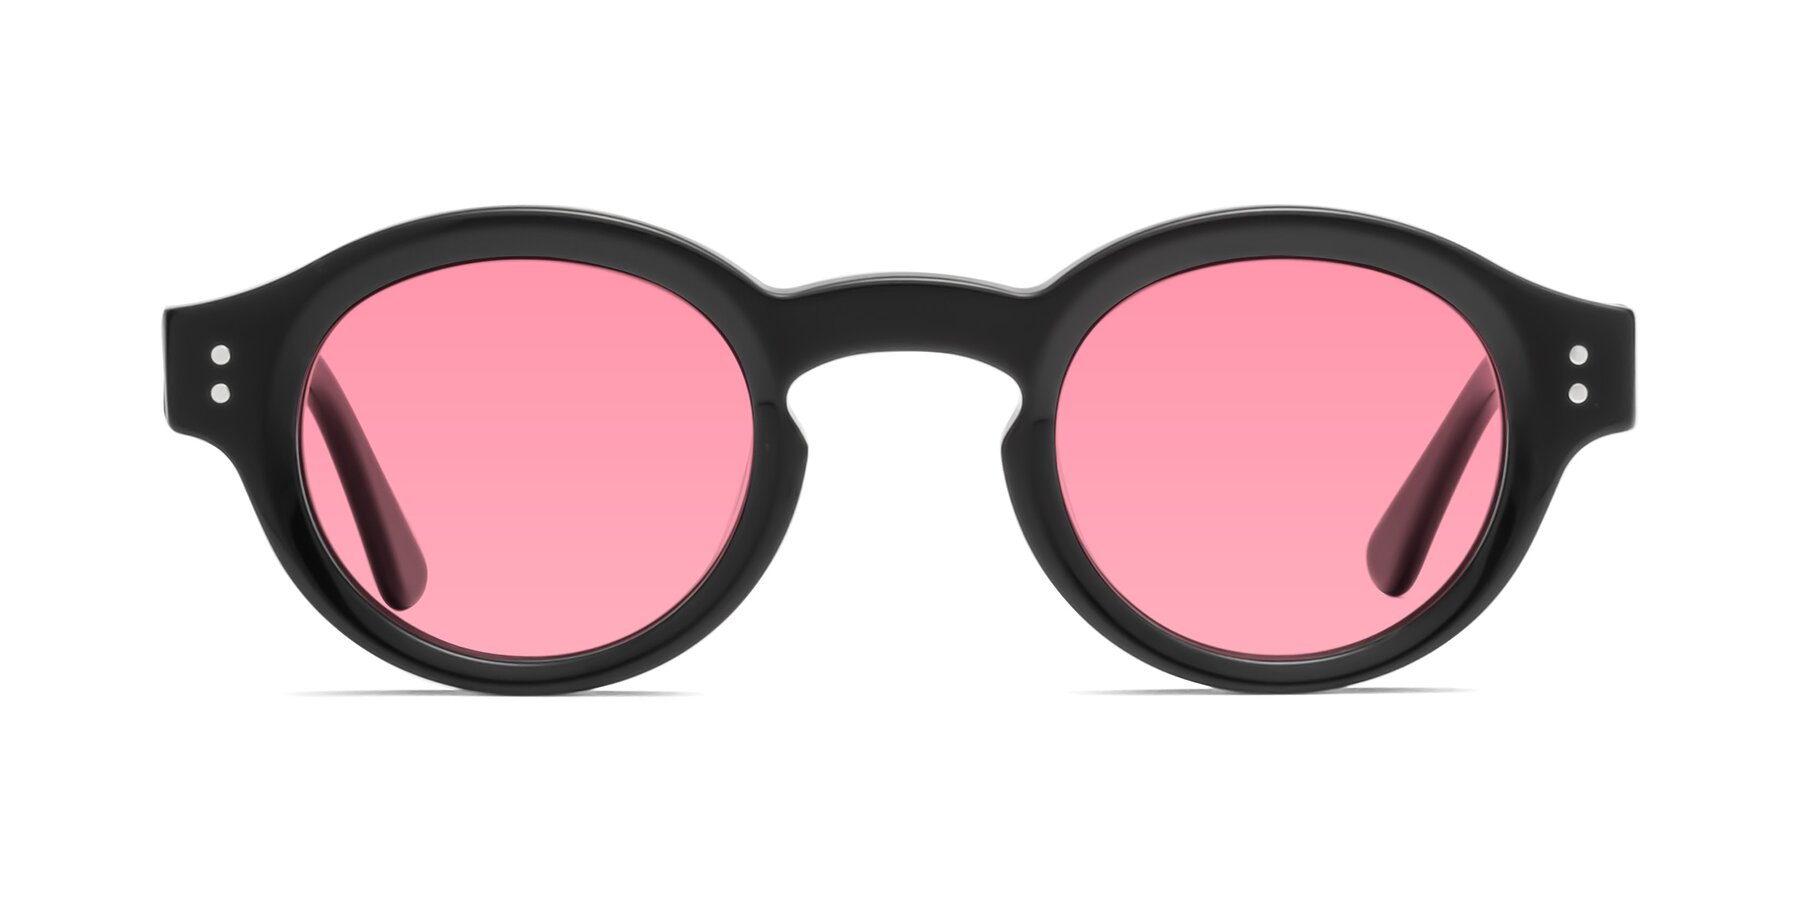 Pine - Black Sunglasses